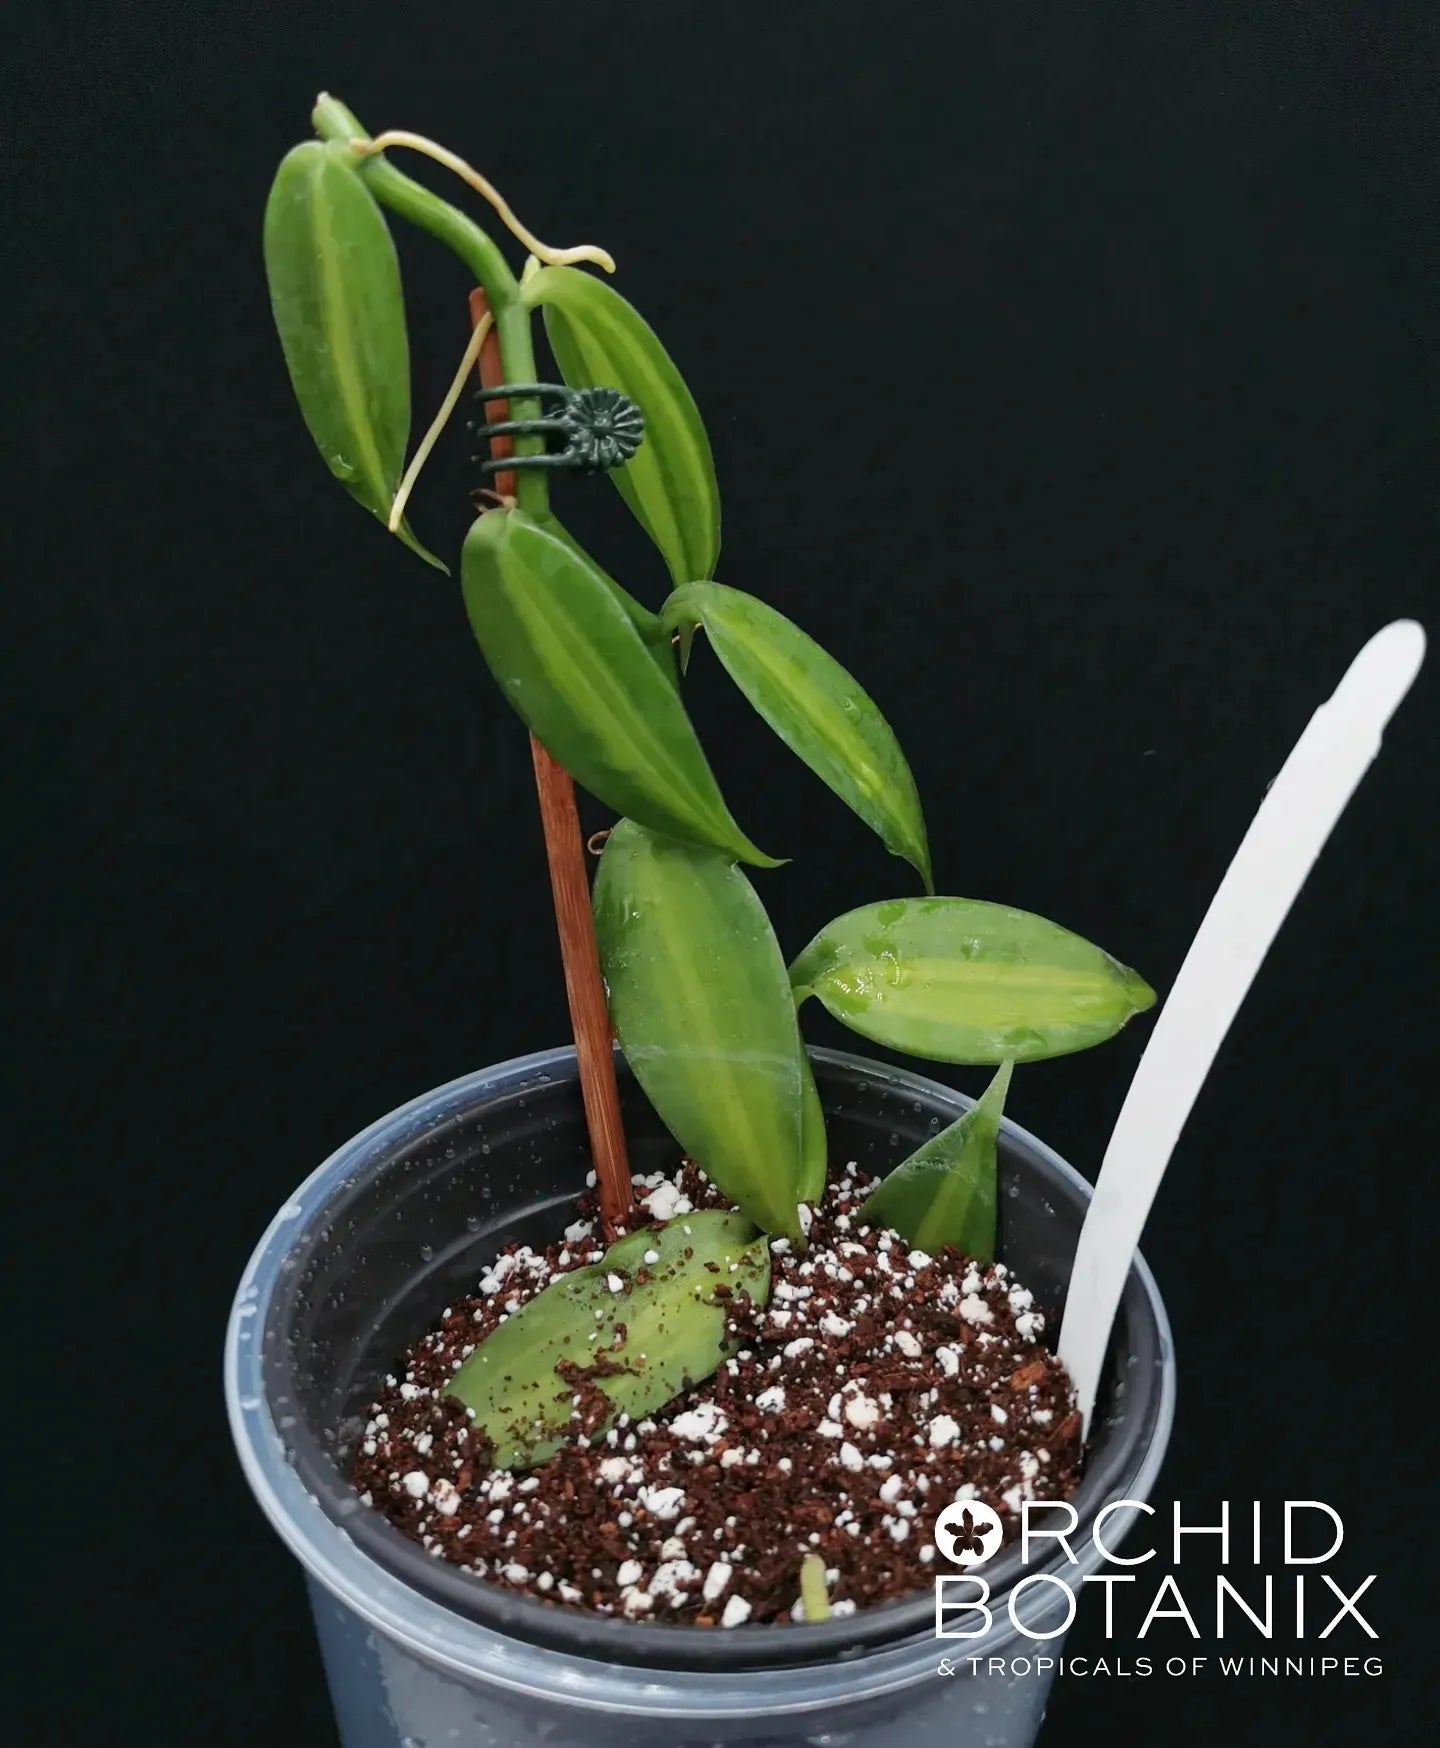 Vanilla planifolia variegata